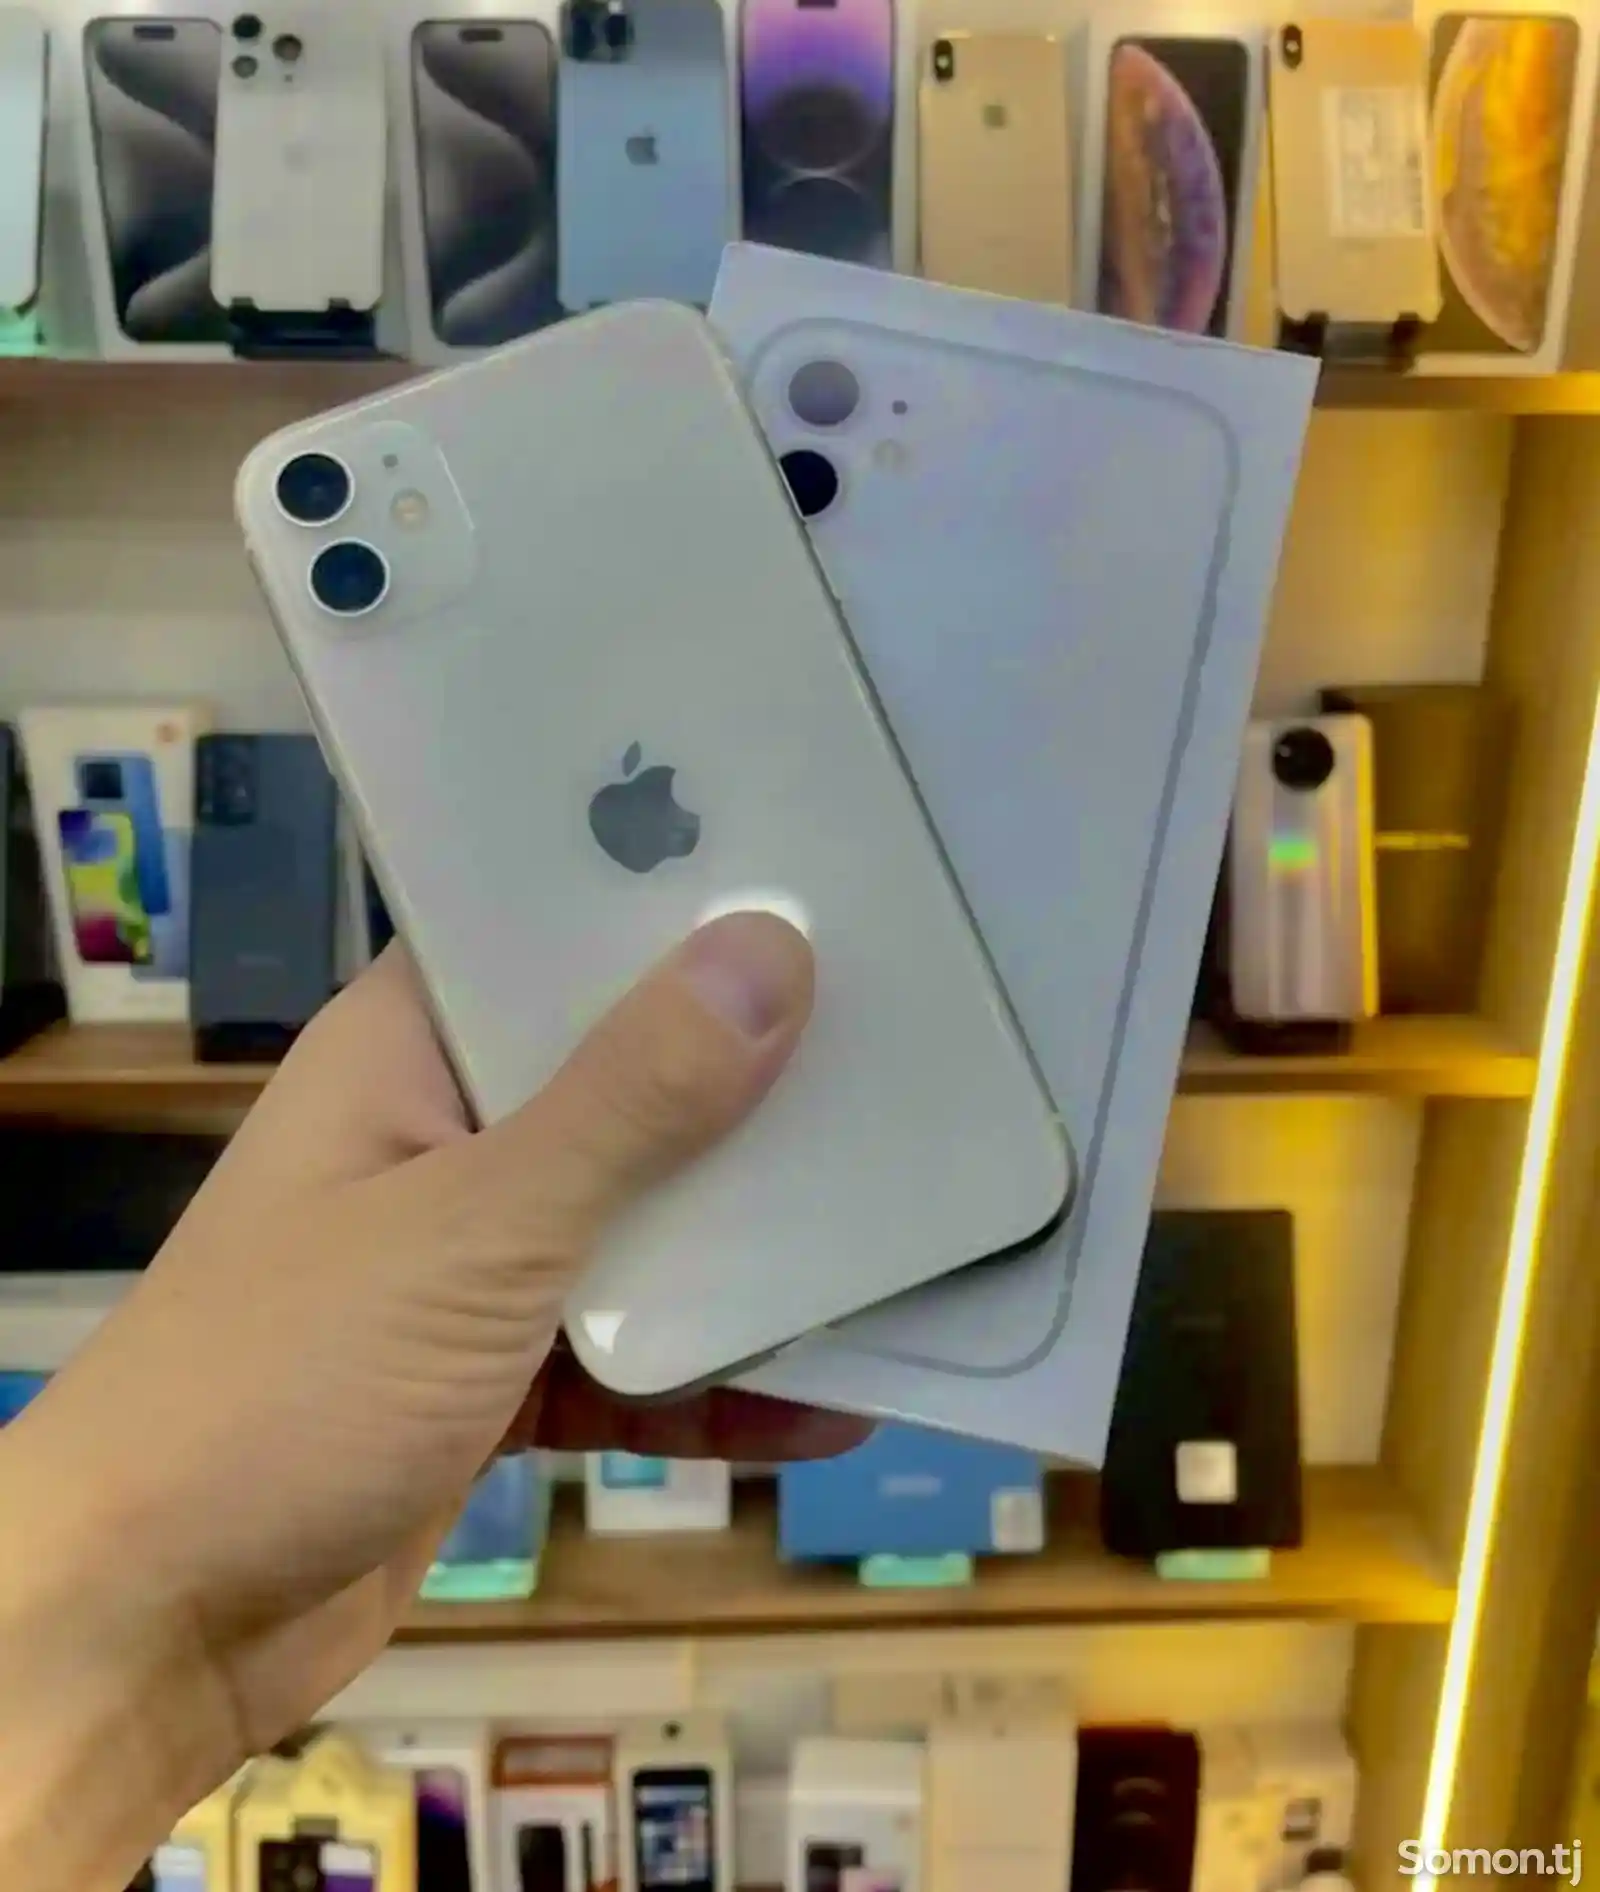 Apple iPhone 11, 128 gb, White-1